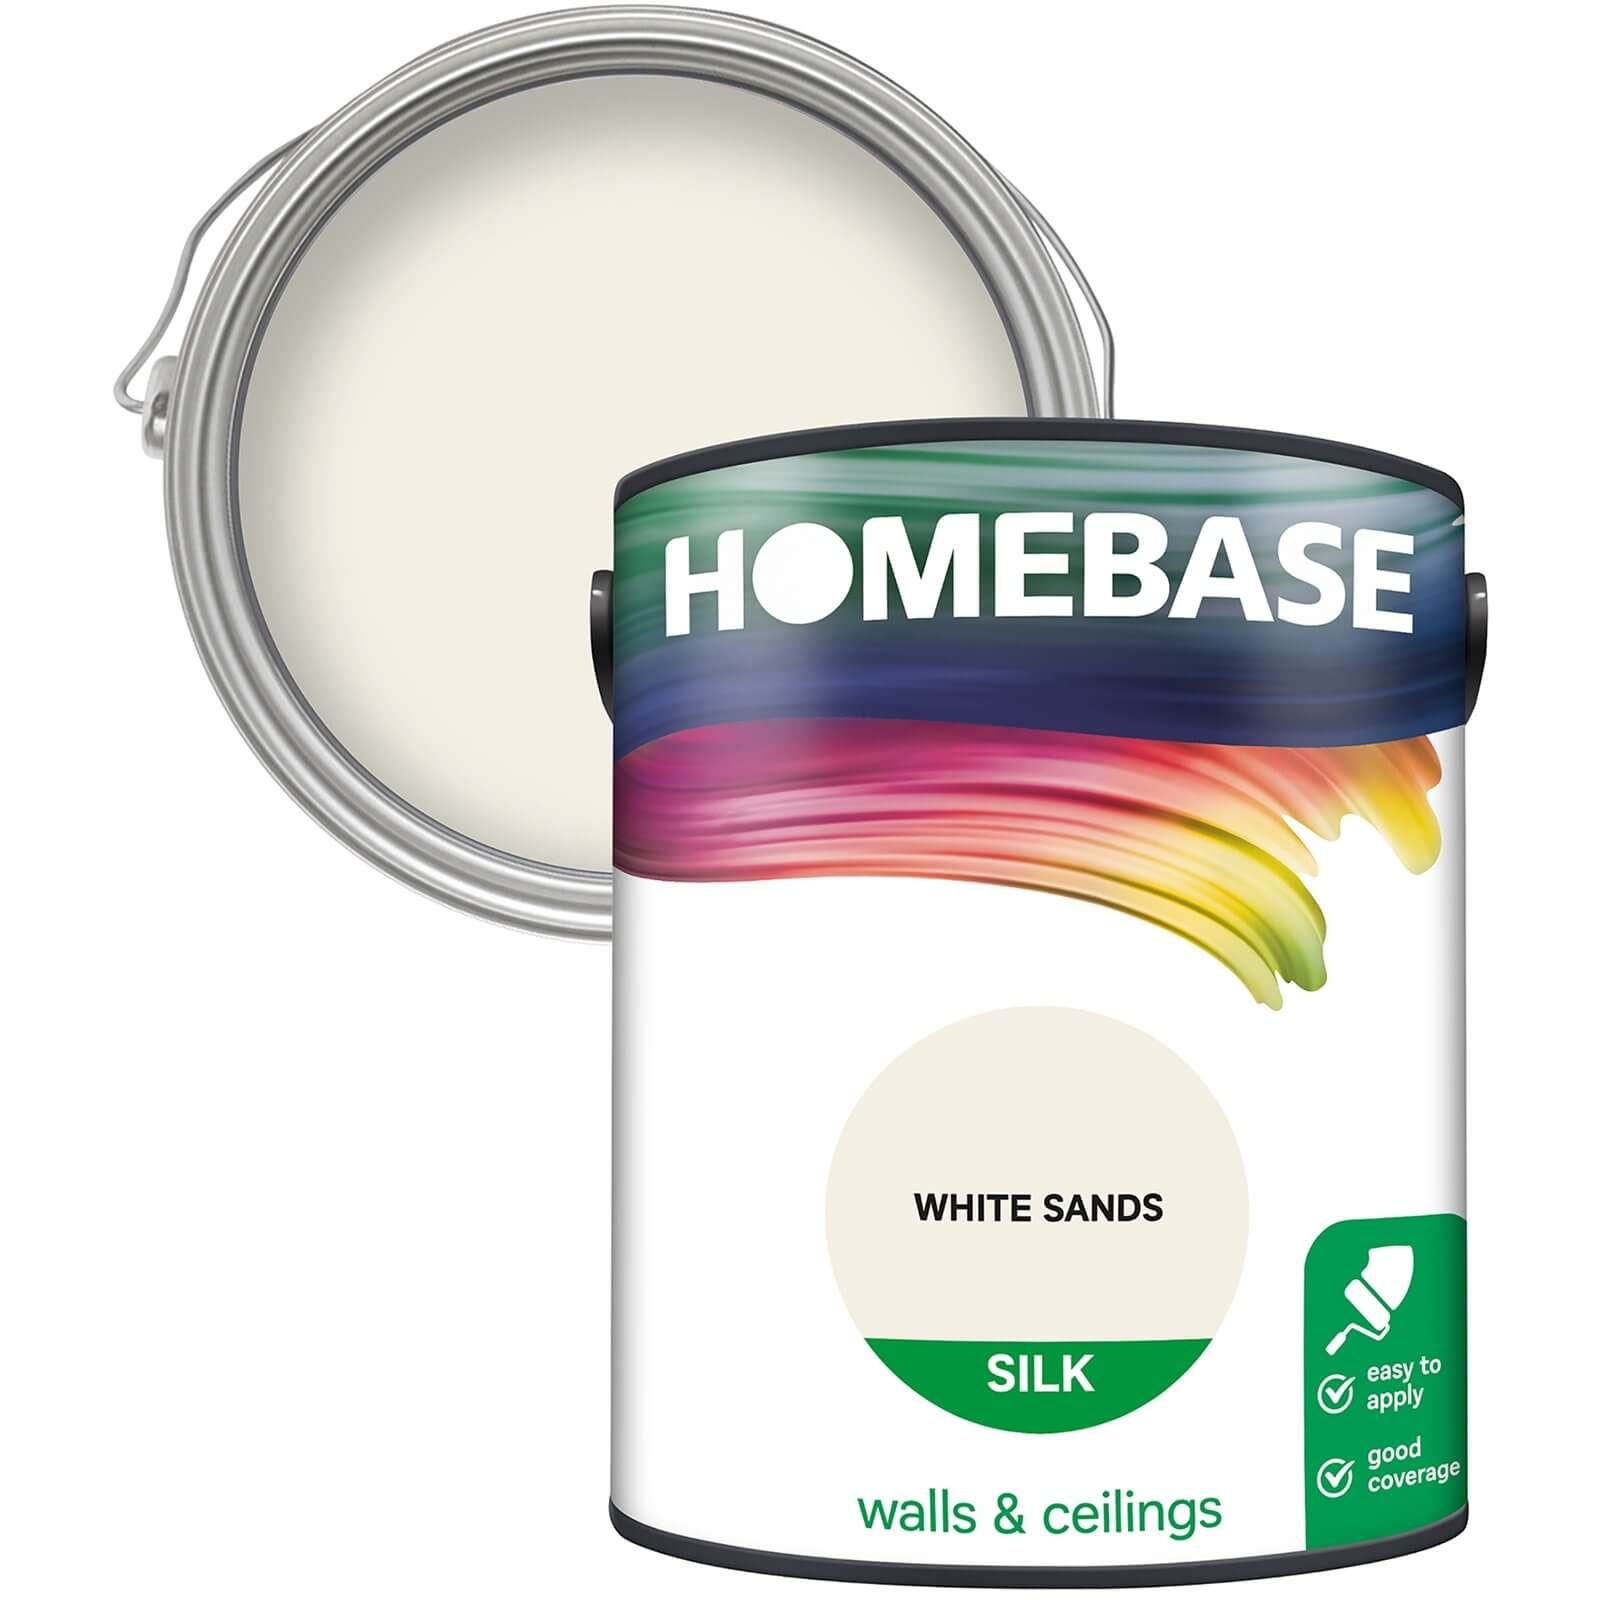 Photo of Homebase Silk Paint - White Sands 5l